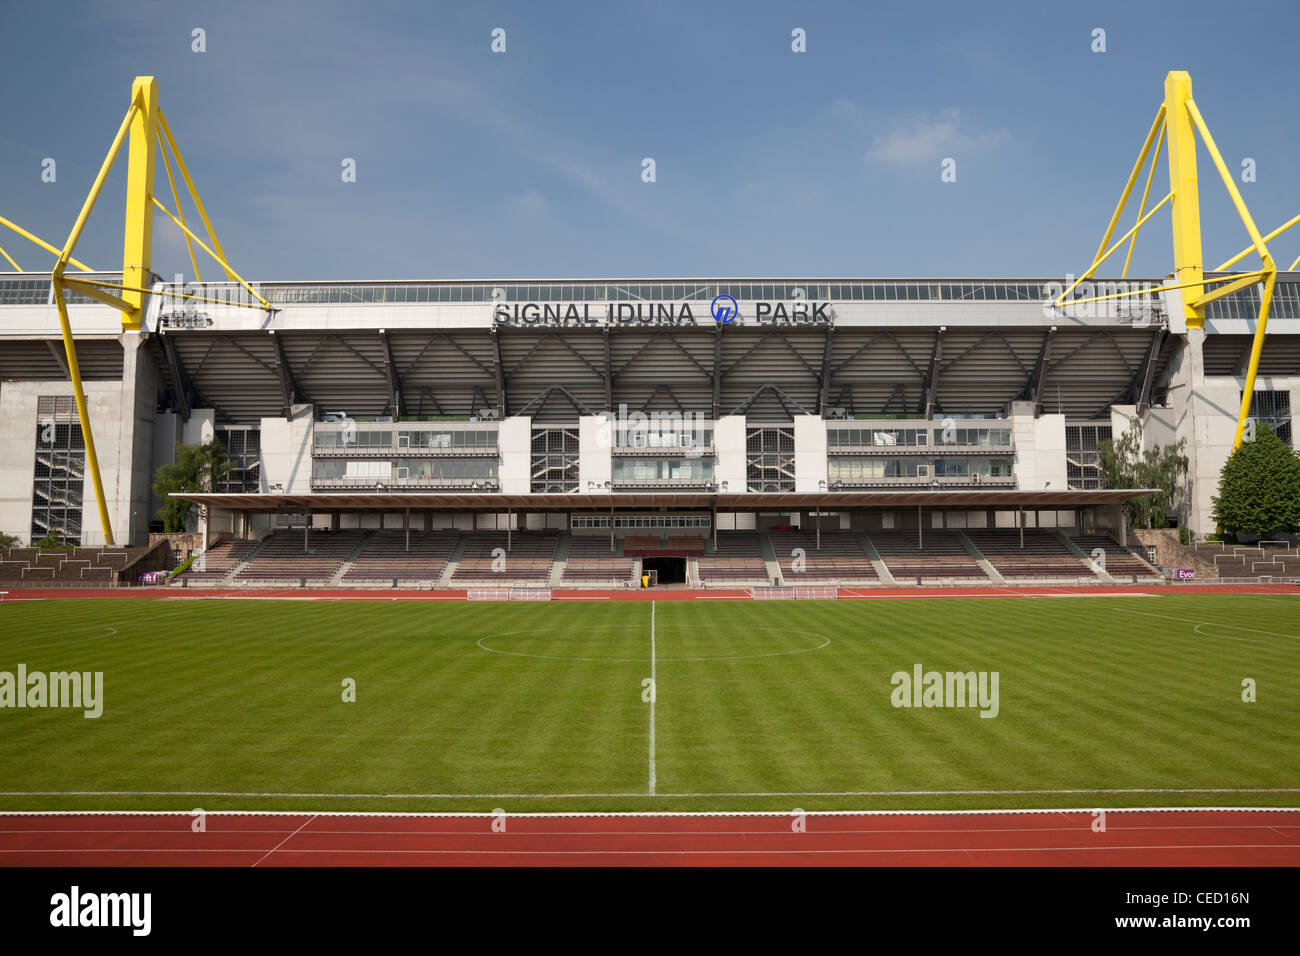 Stade Signal Iduna Park, Dortmund, Ruhr, Nordrhein-Westfalen, Germany, Europe Banque D'Images